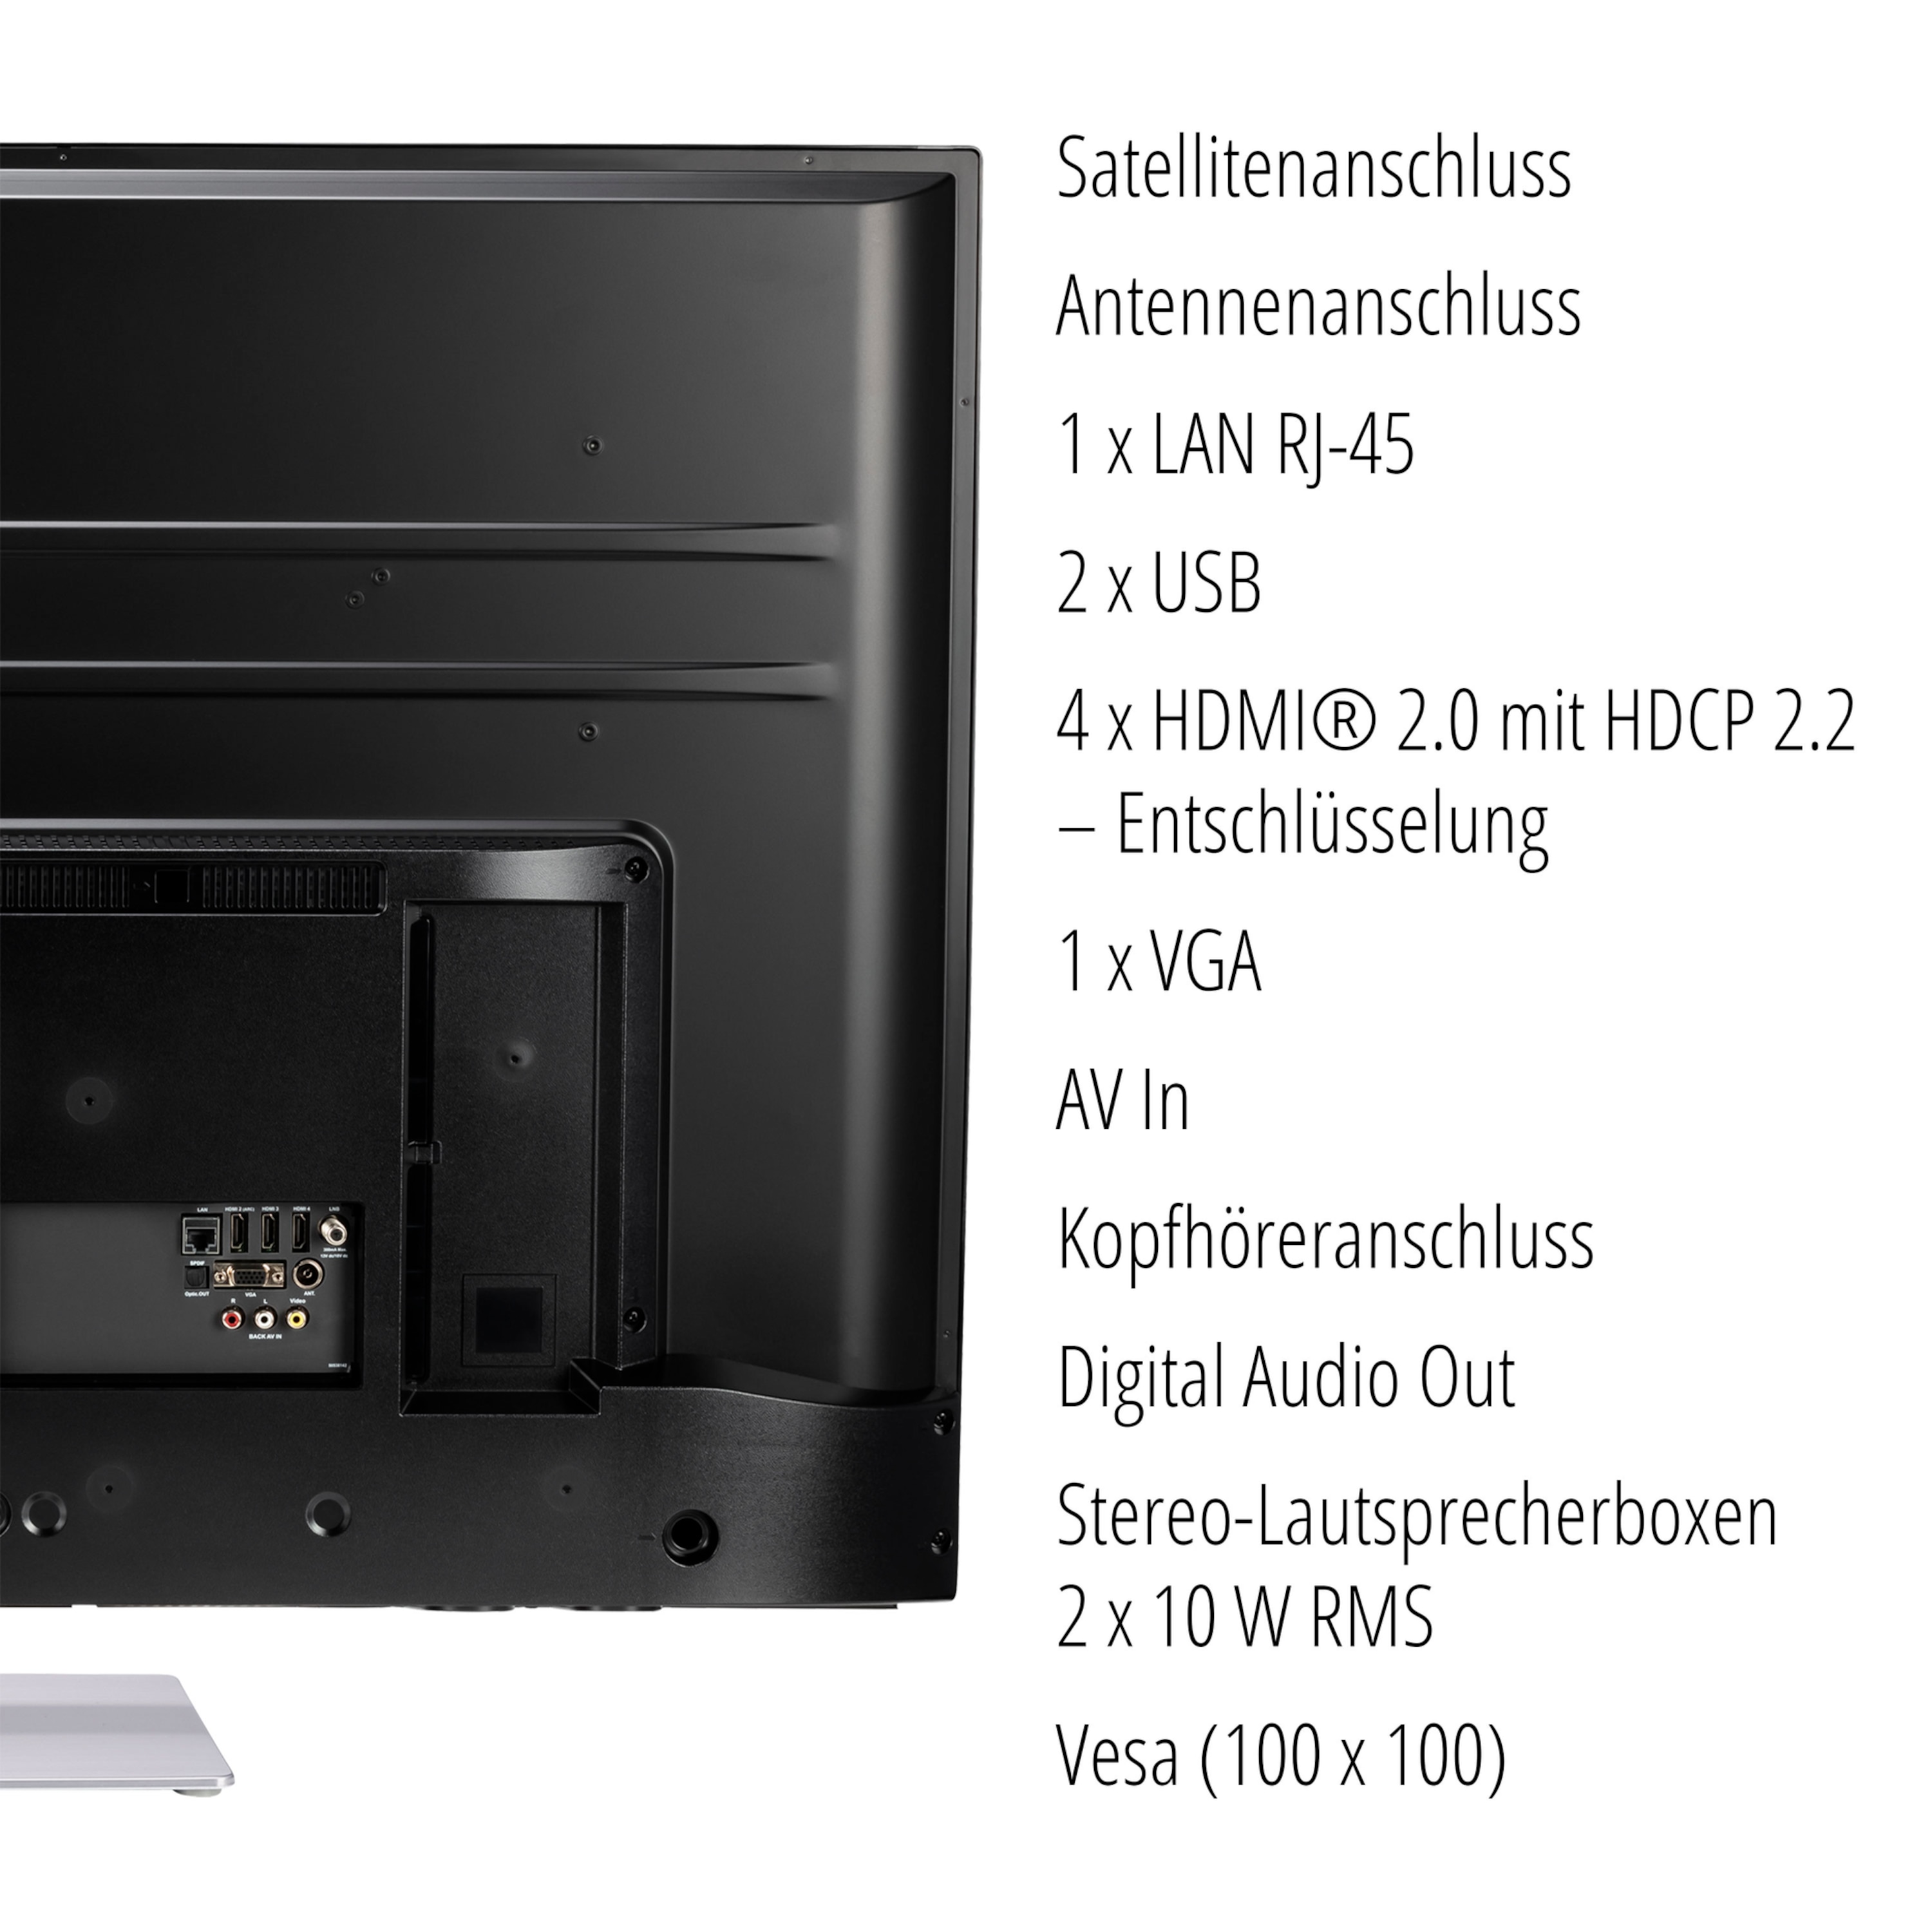 MEDION® LIFE® X14312 108 cm (43'') Ultra HD Smart-TV + E62003 Funkkopfhörer - ARTIKELSET